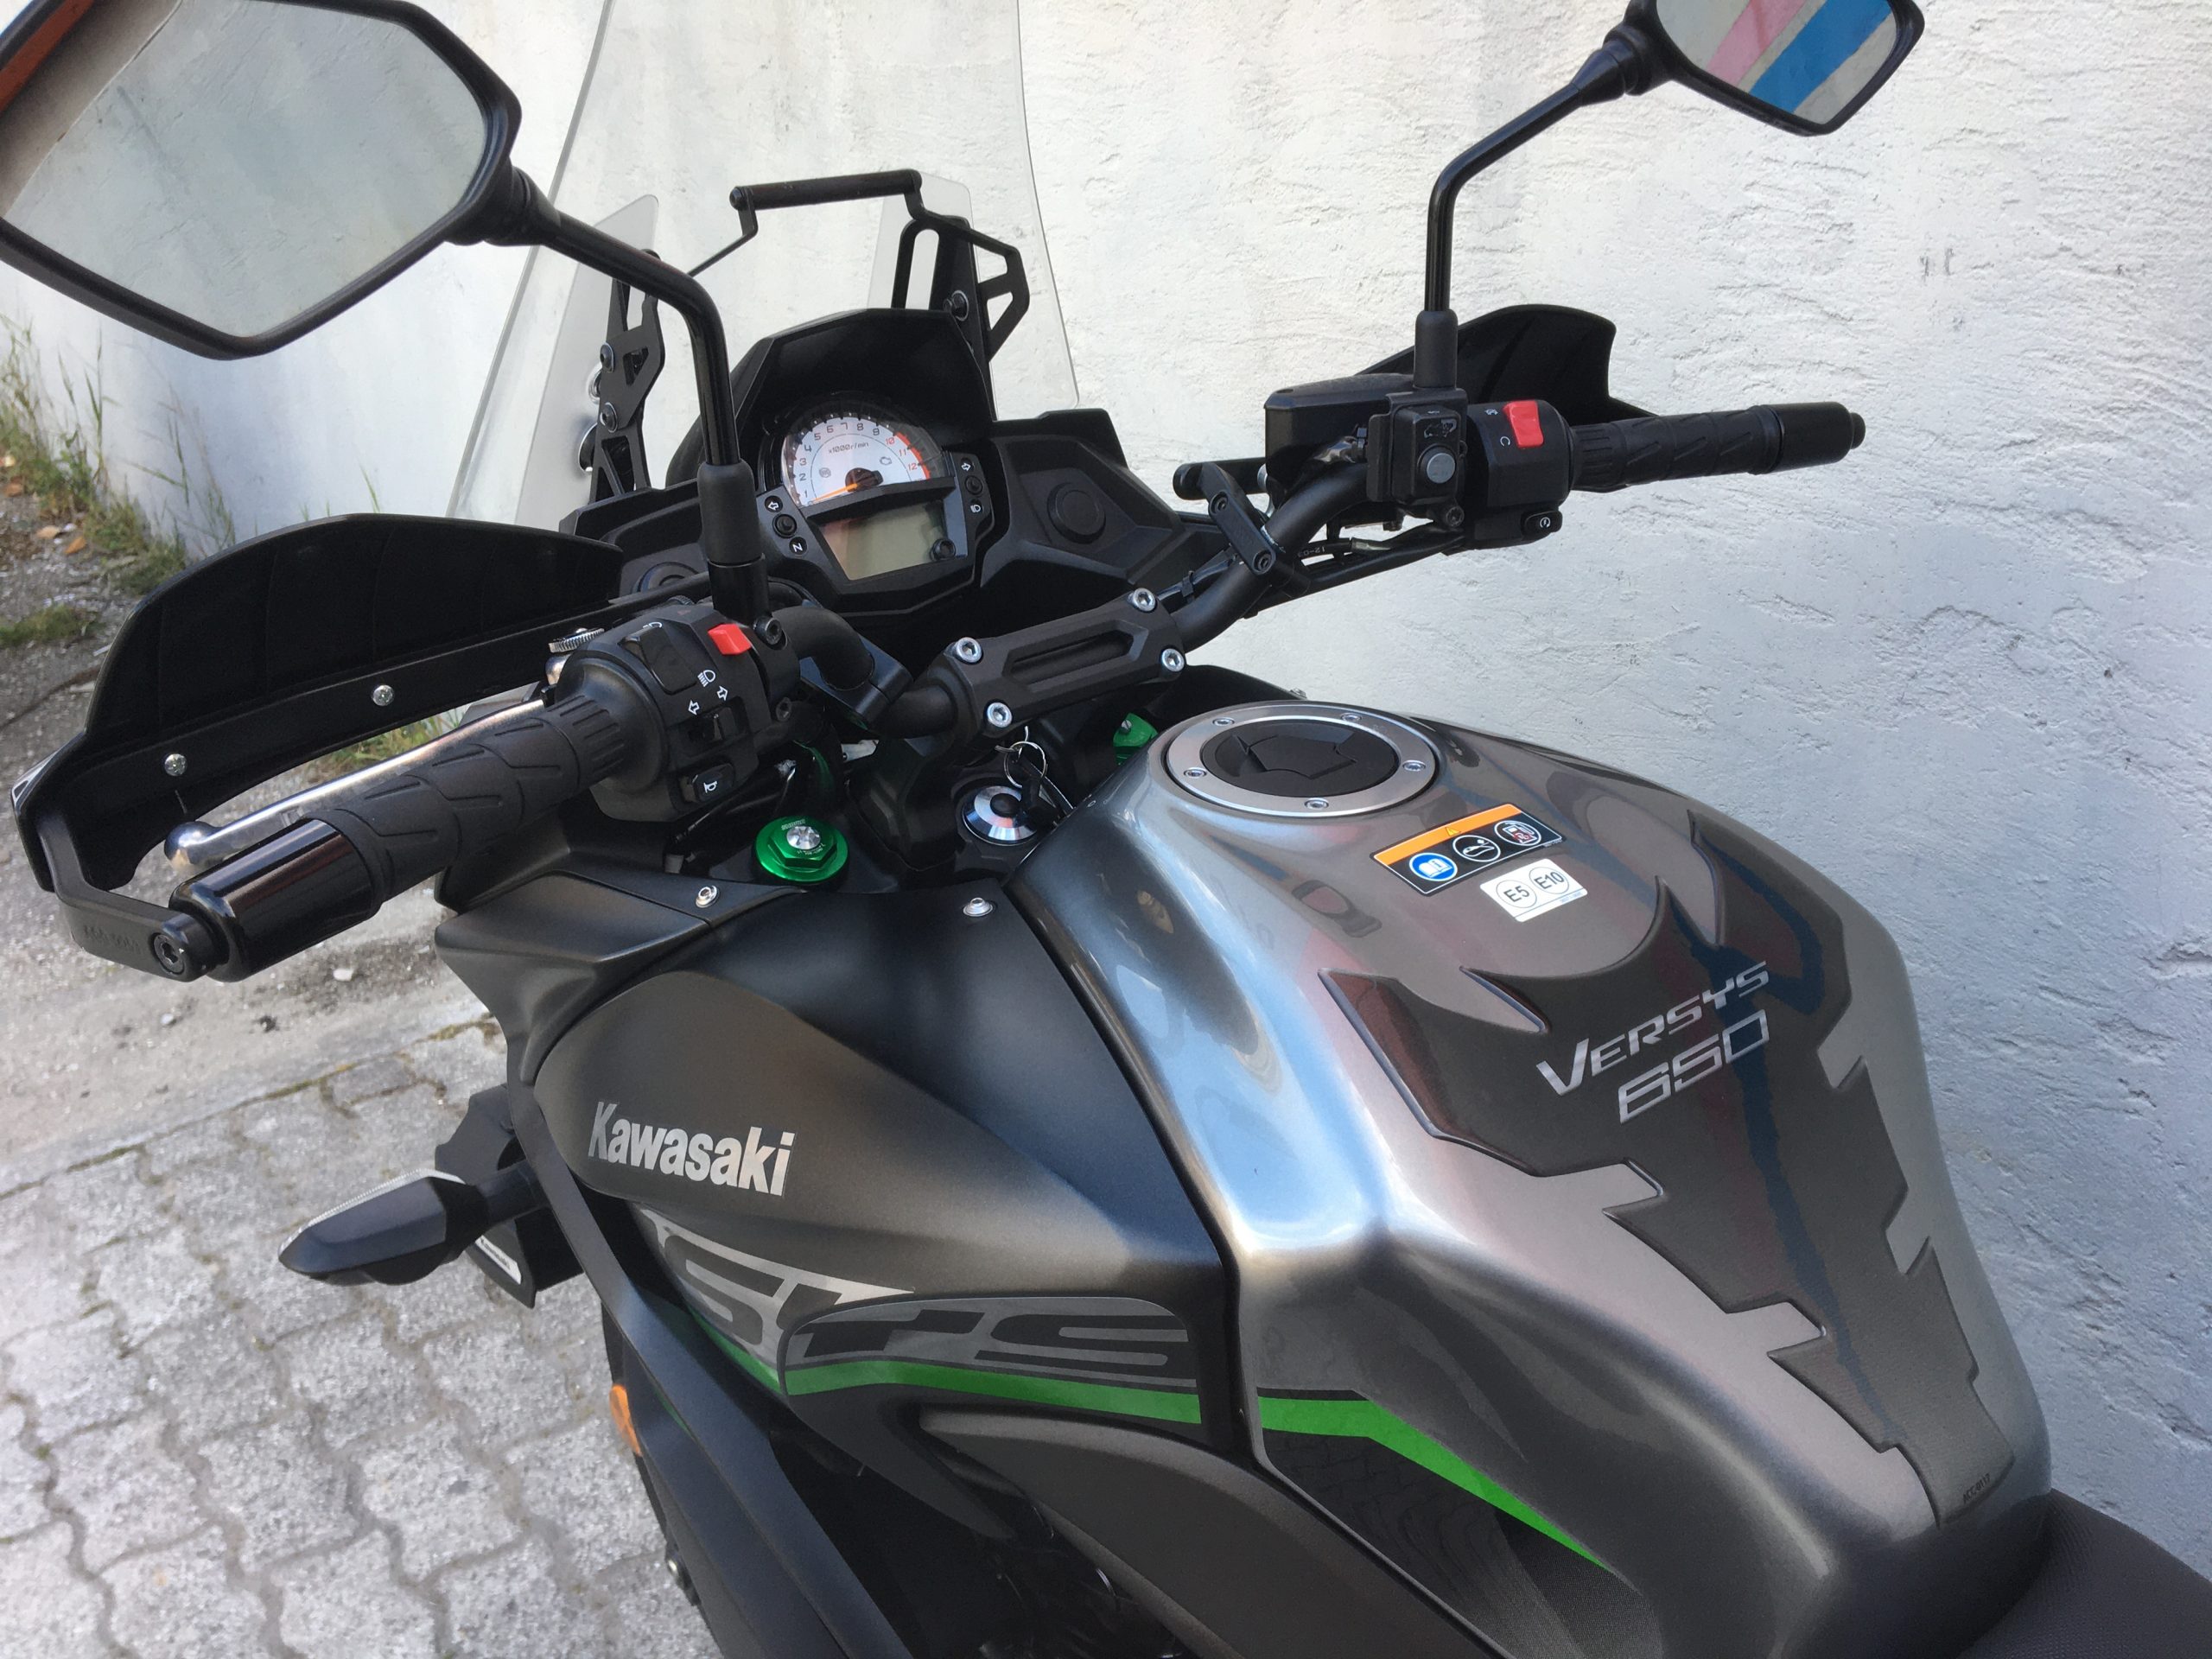 Kawasaki Versys 650 Tourer Plus – 04/2019 – Km 24500